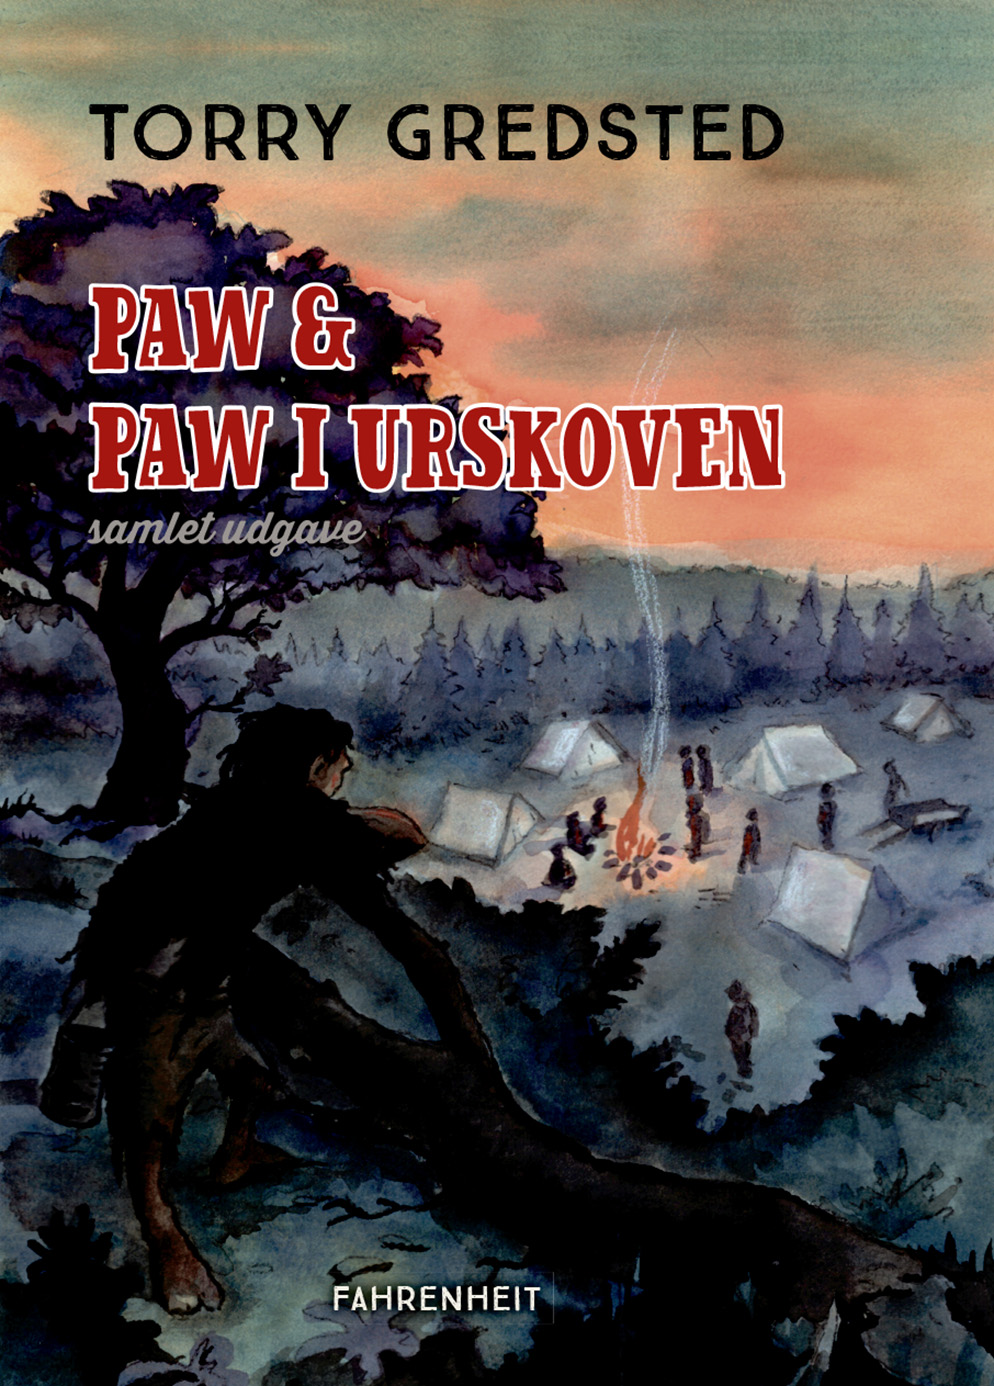 Paw Paw i urskoven – Forlaget